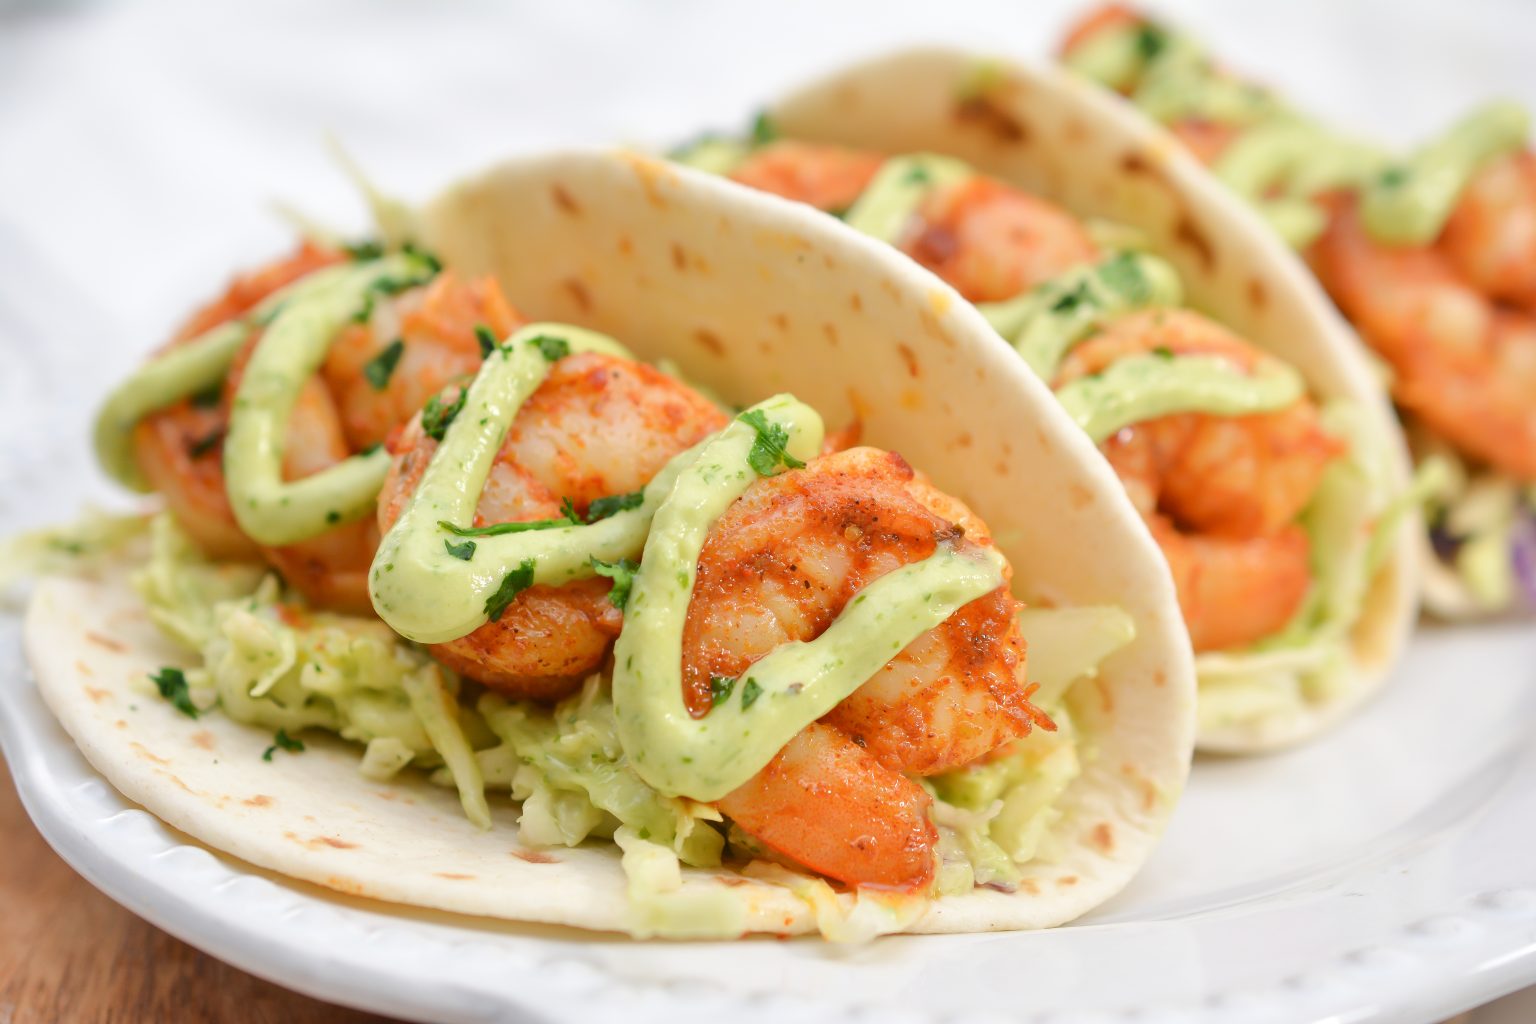 Spicy Shrimp Tacos with Avocado Crema - Sweet Pea's Kitchen